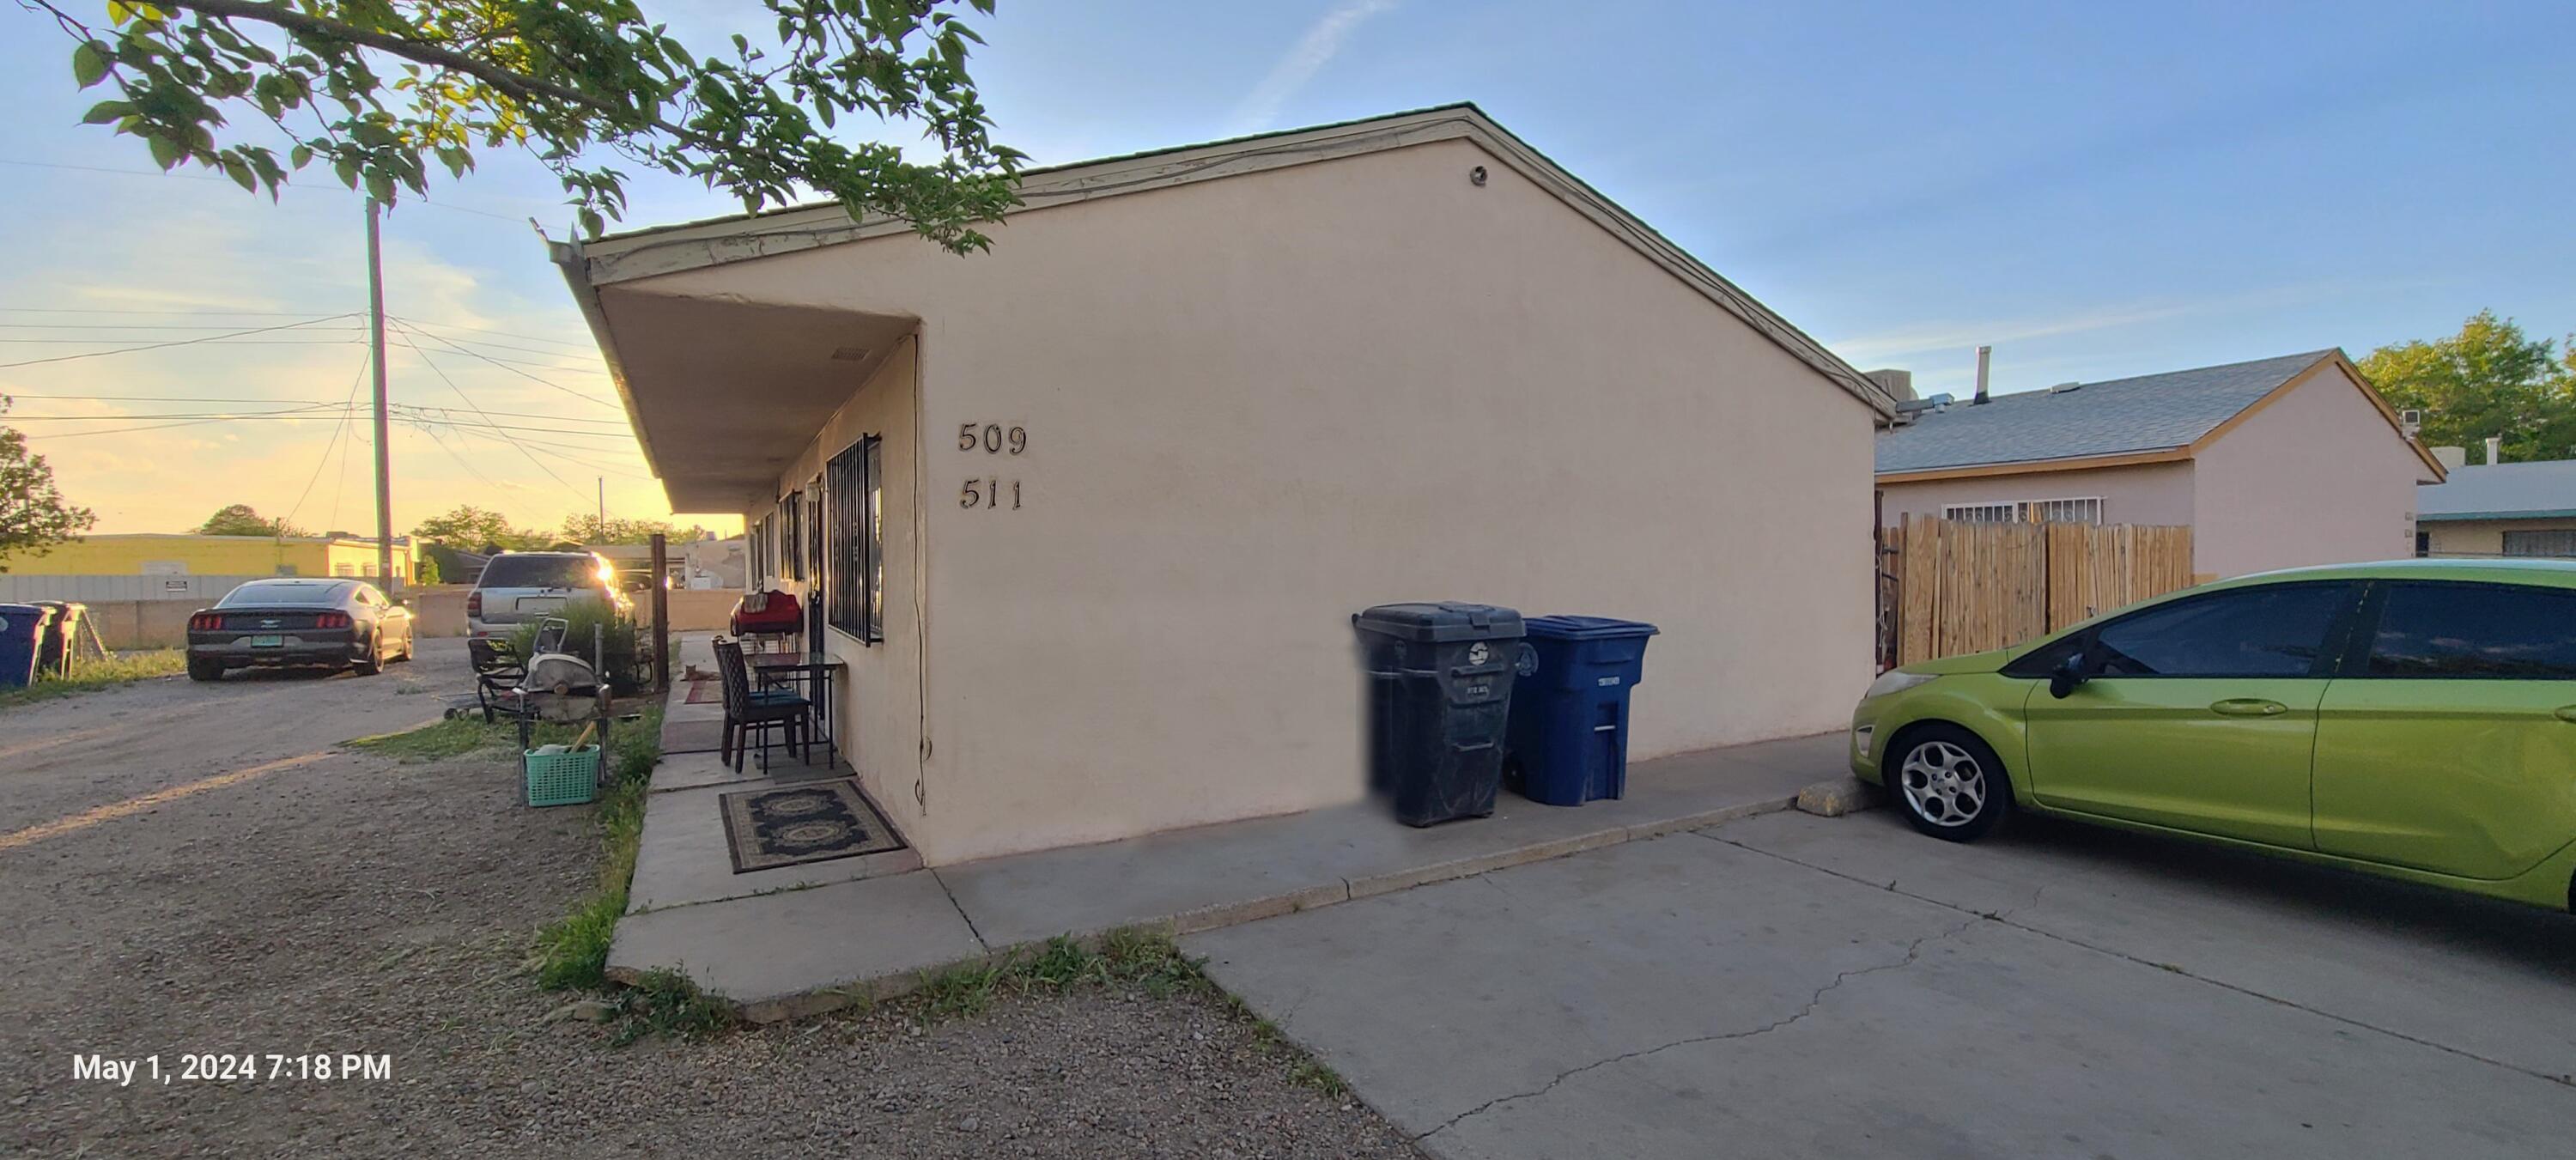 509-511 Utah Street SE, Albuquerque, New Mexico 87108, 2 Bedrooms Bedrooms, ,1 BathroomBathrooms,Residential Income,For Sale,509-511 Utah Street SE,1061809